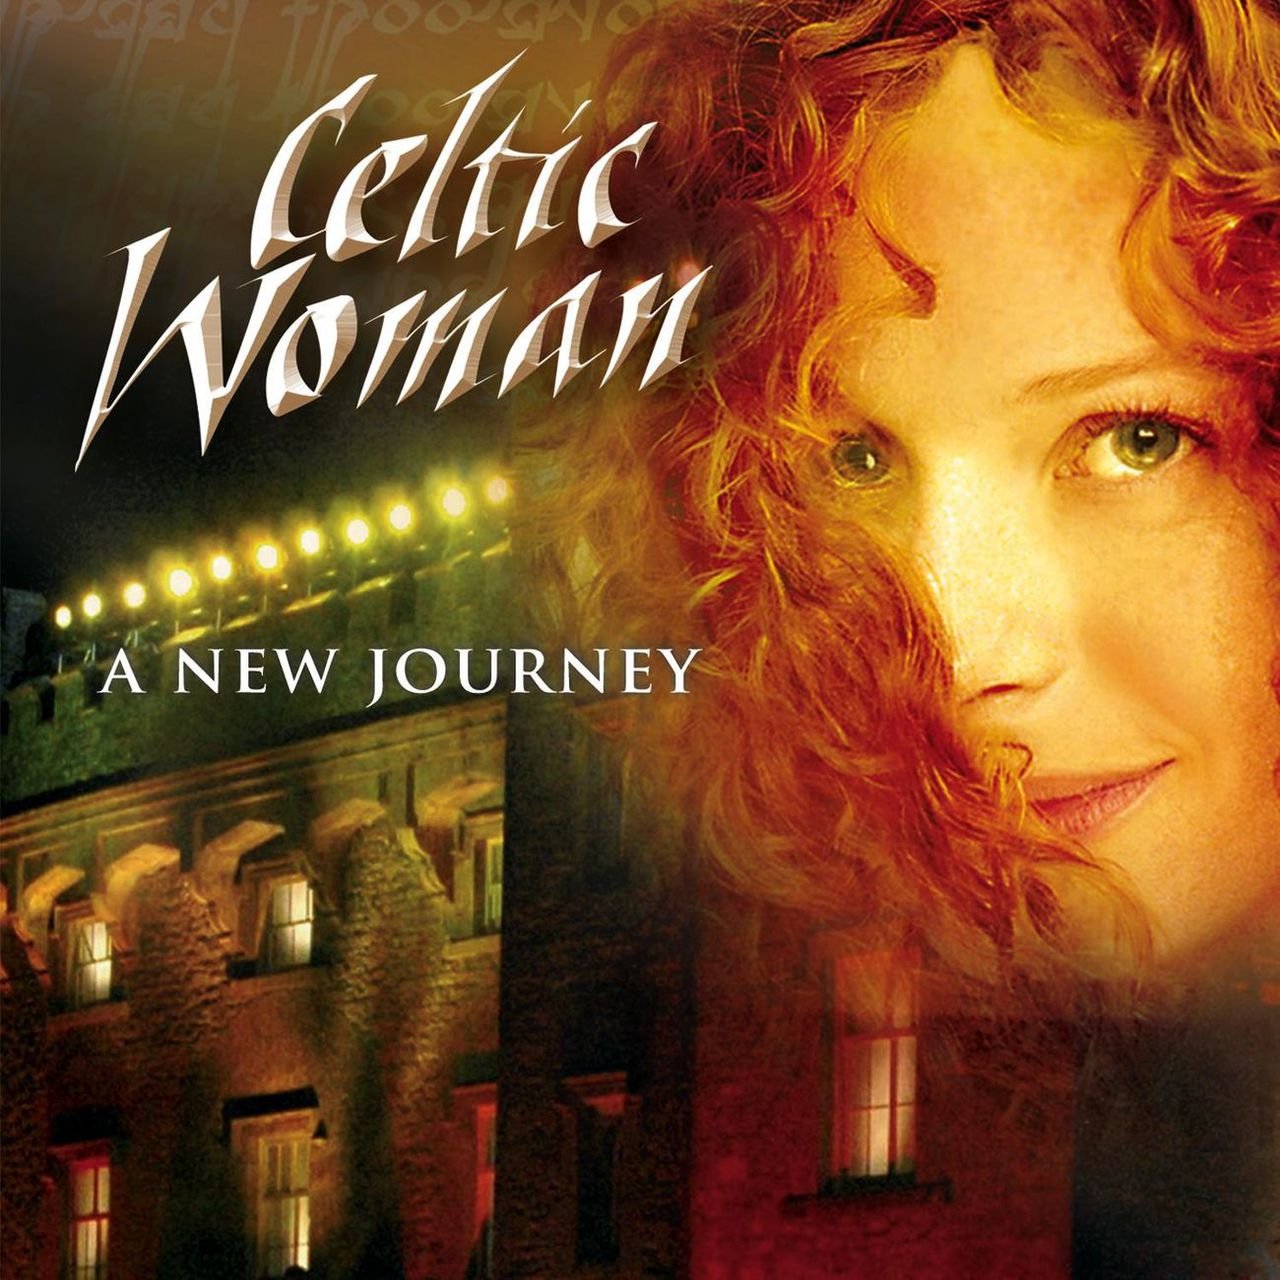 Celtic Woman — The Voice cover artwork